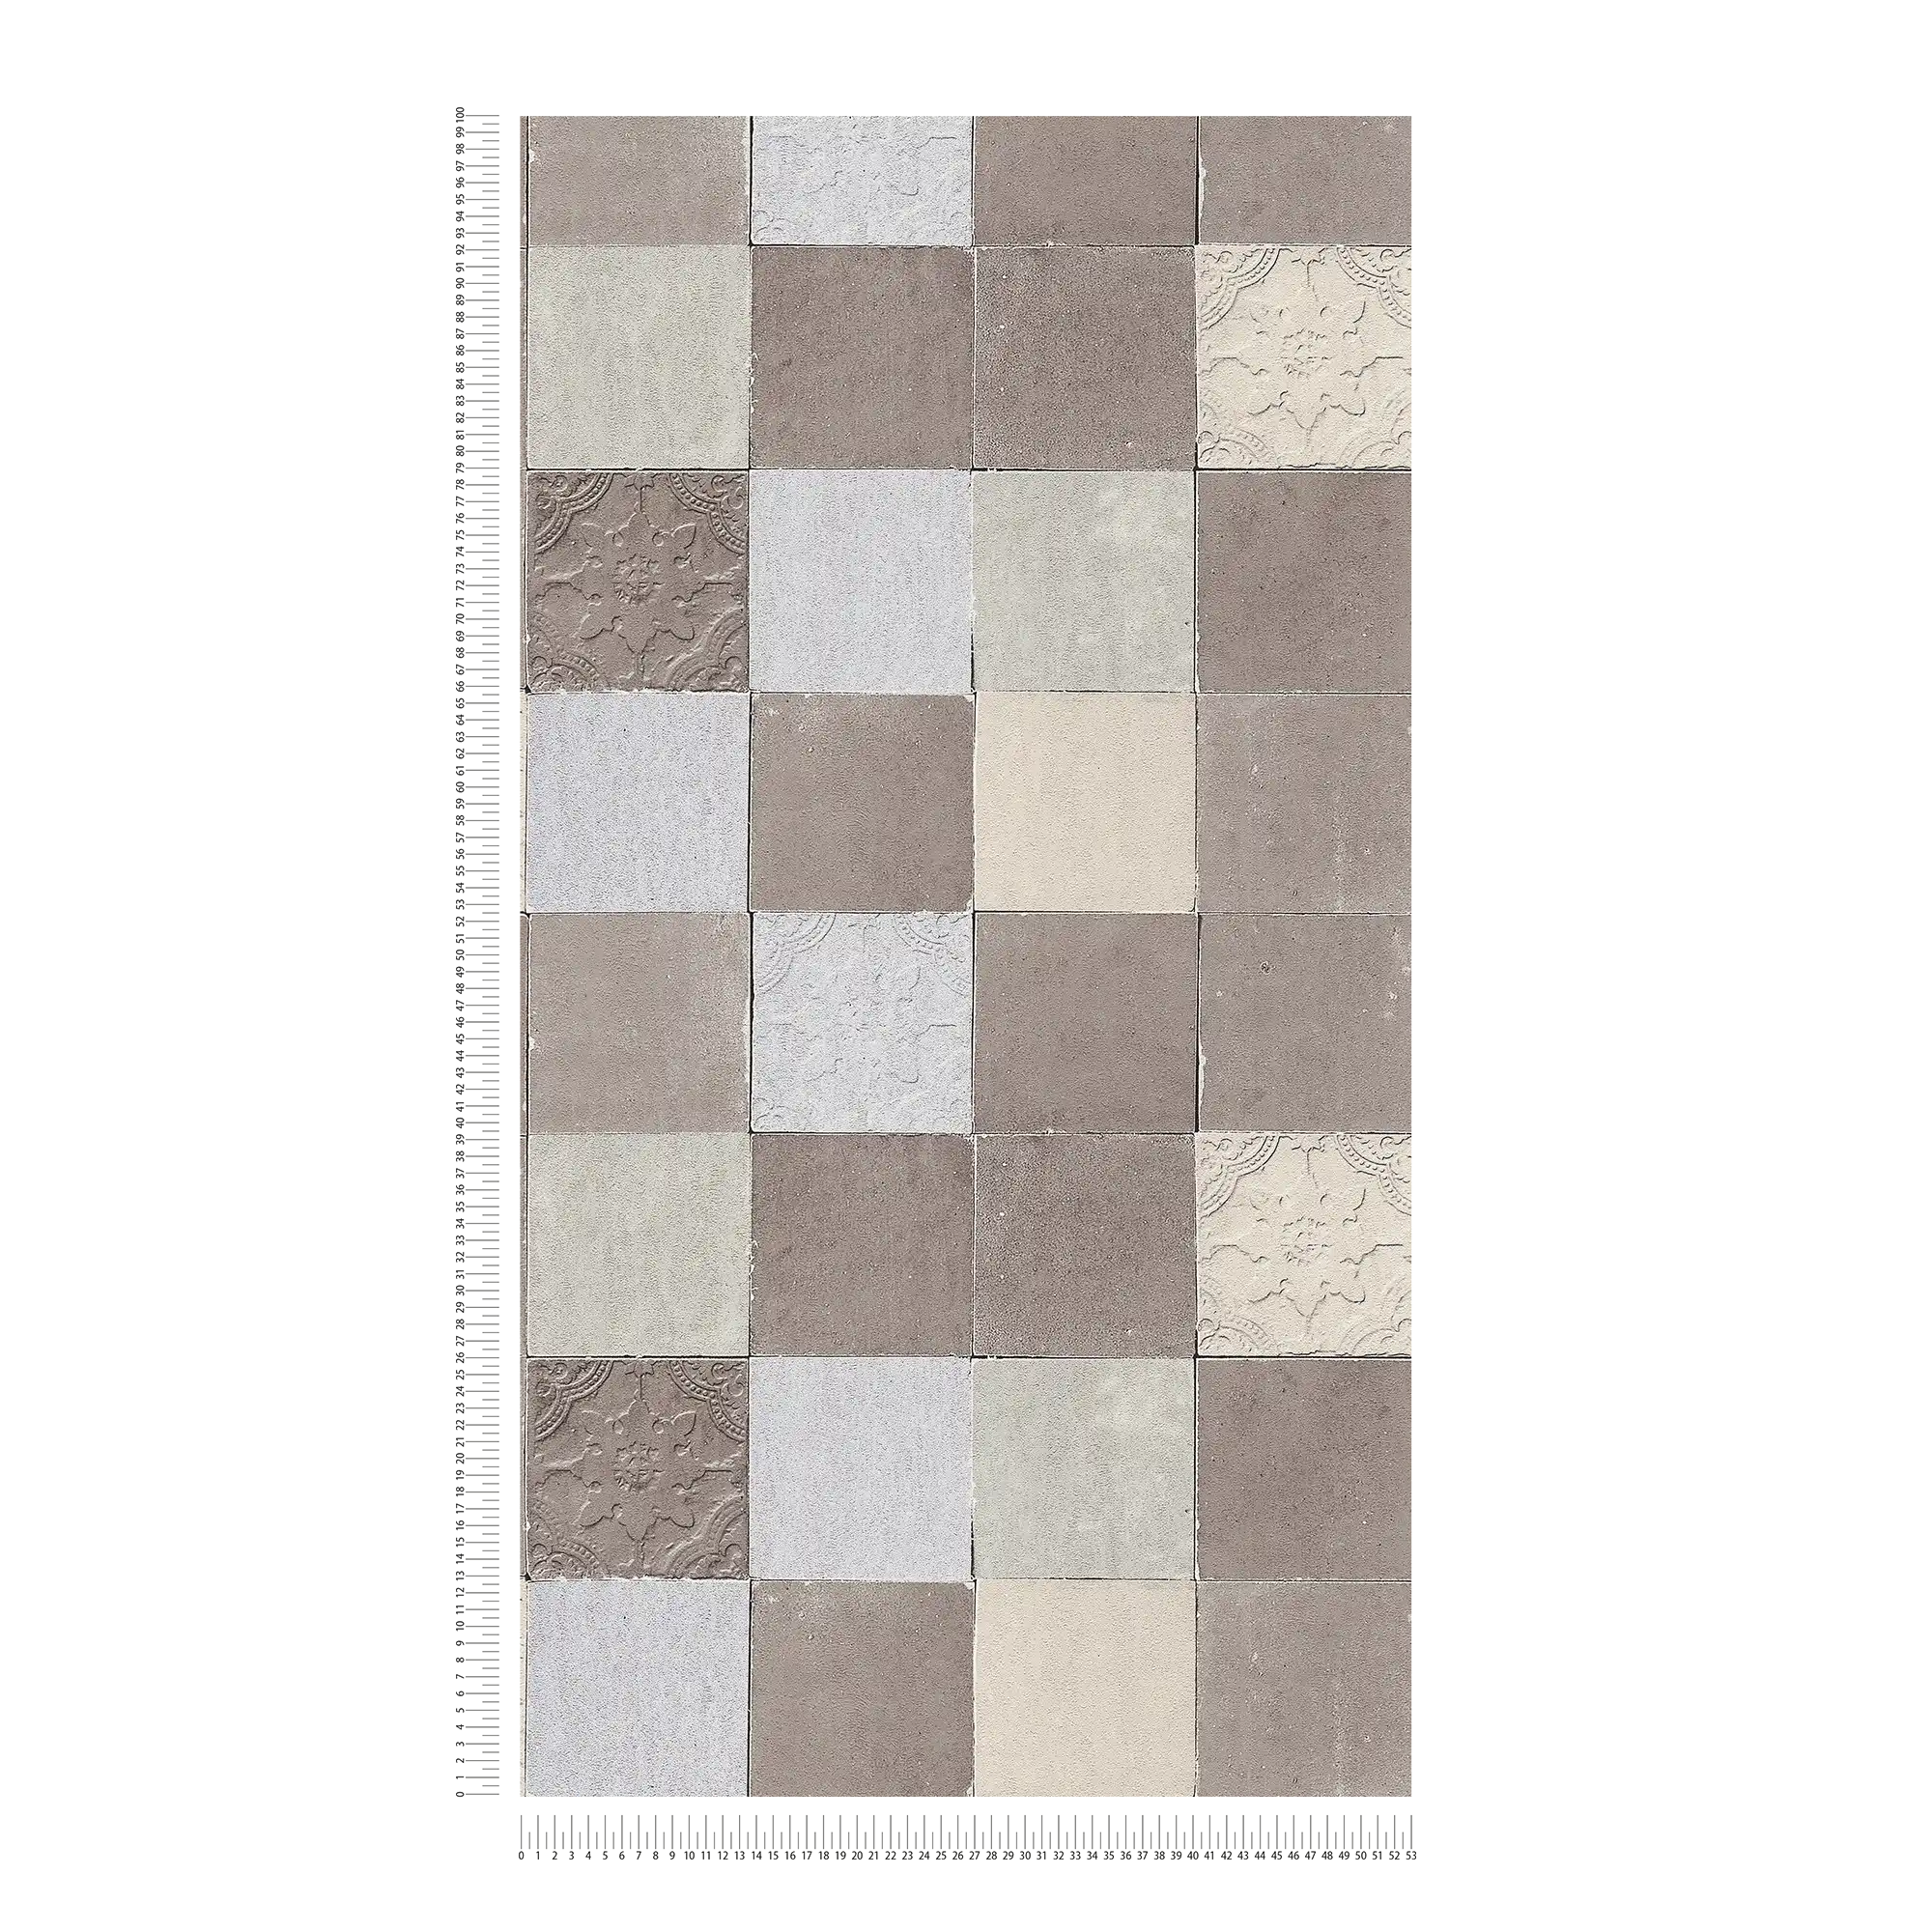             Tile wallpaper oriental mosaic - grey, cream
        